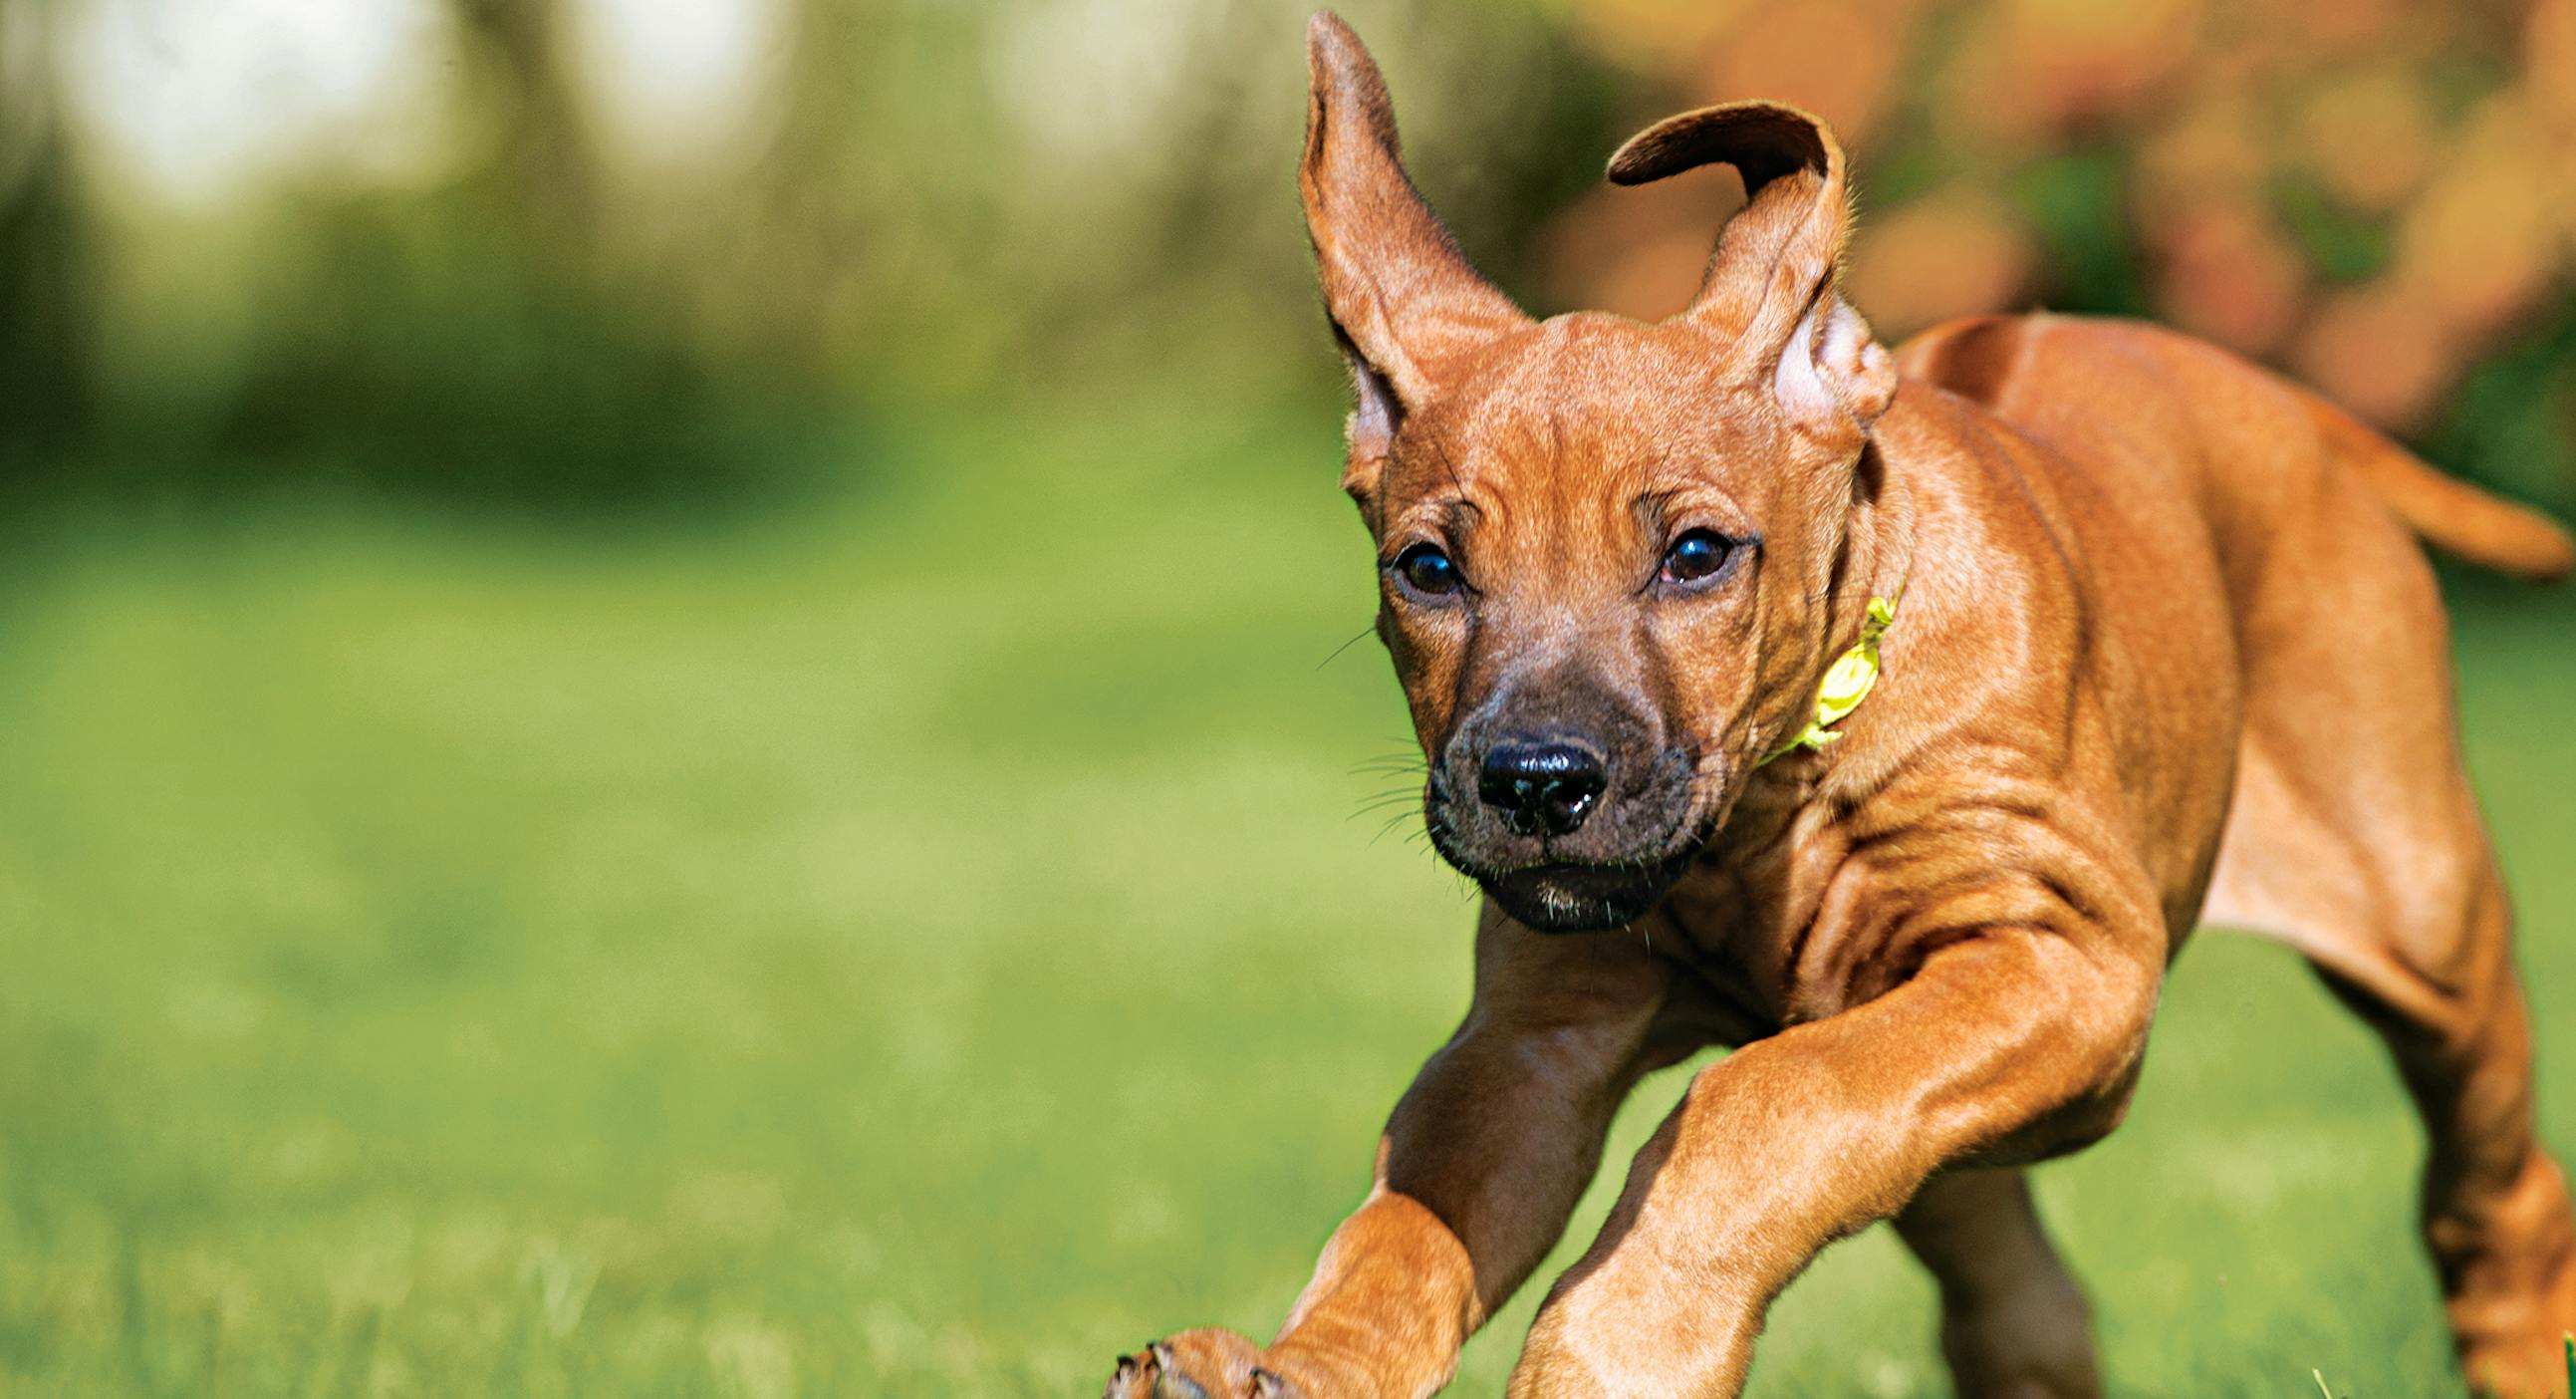 a close-up of a brown puppy running on a grass field 